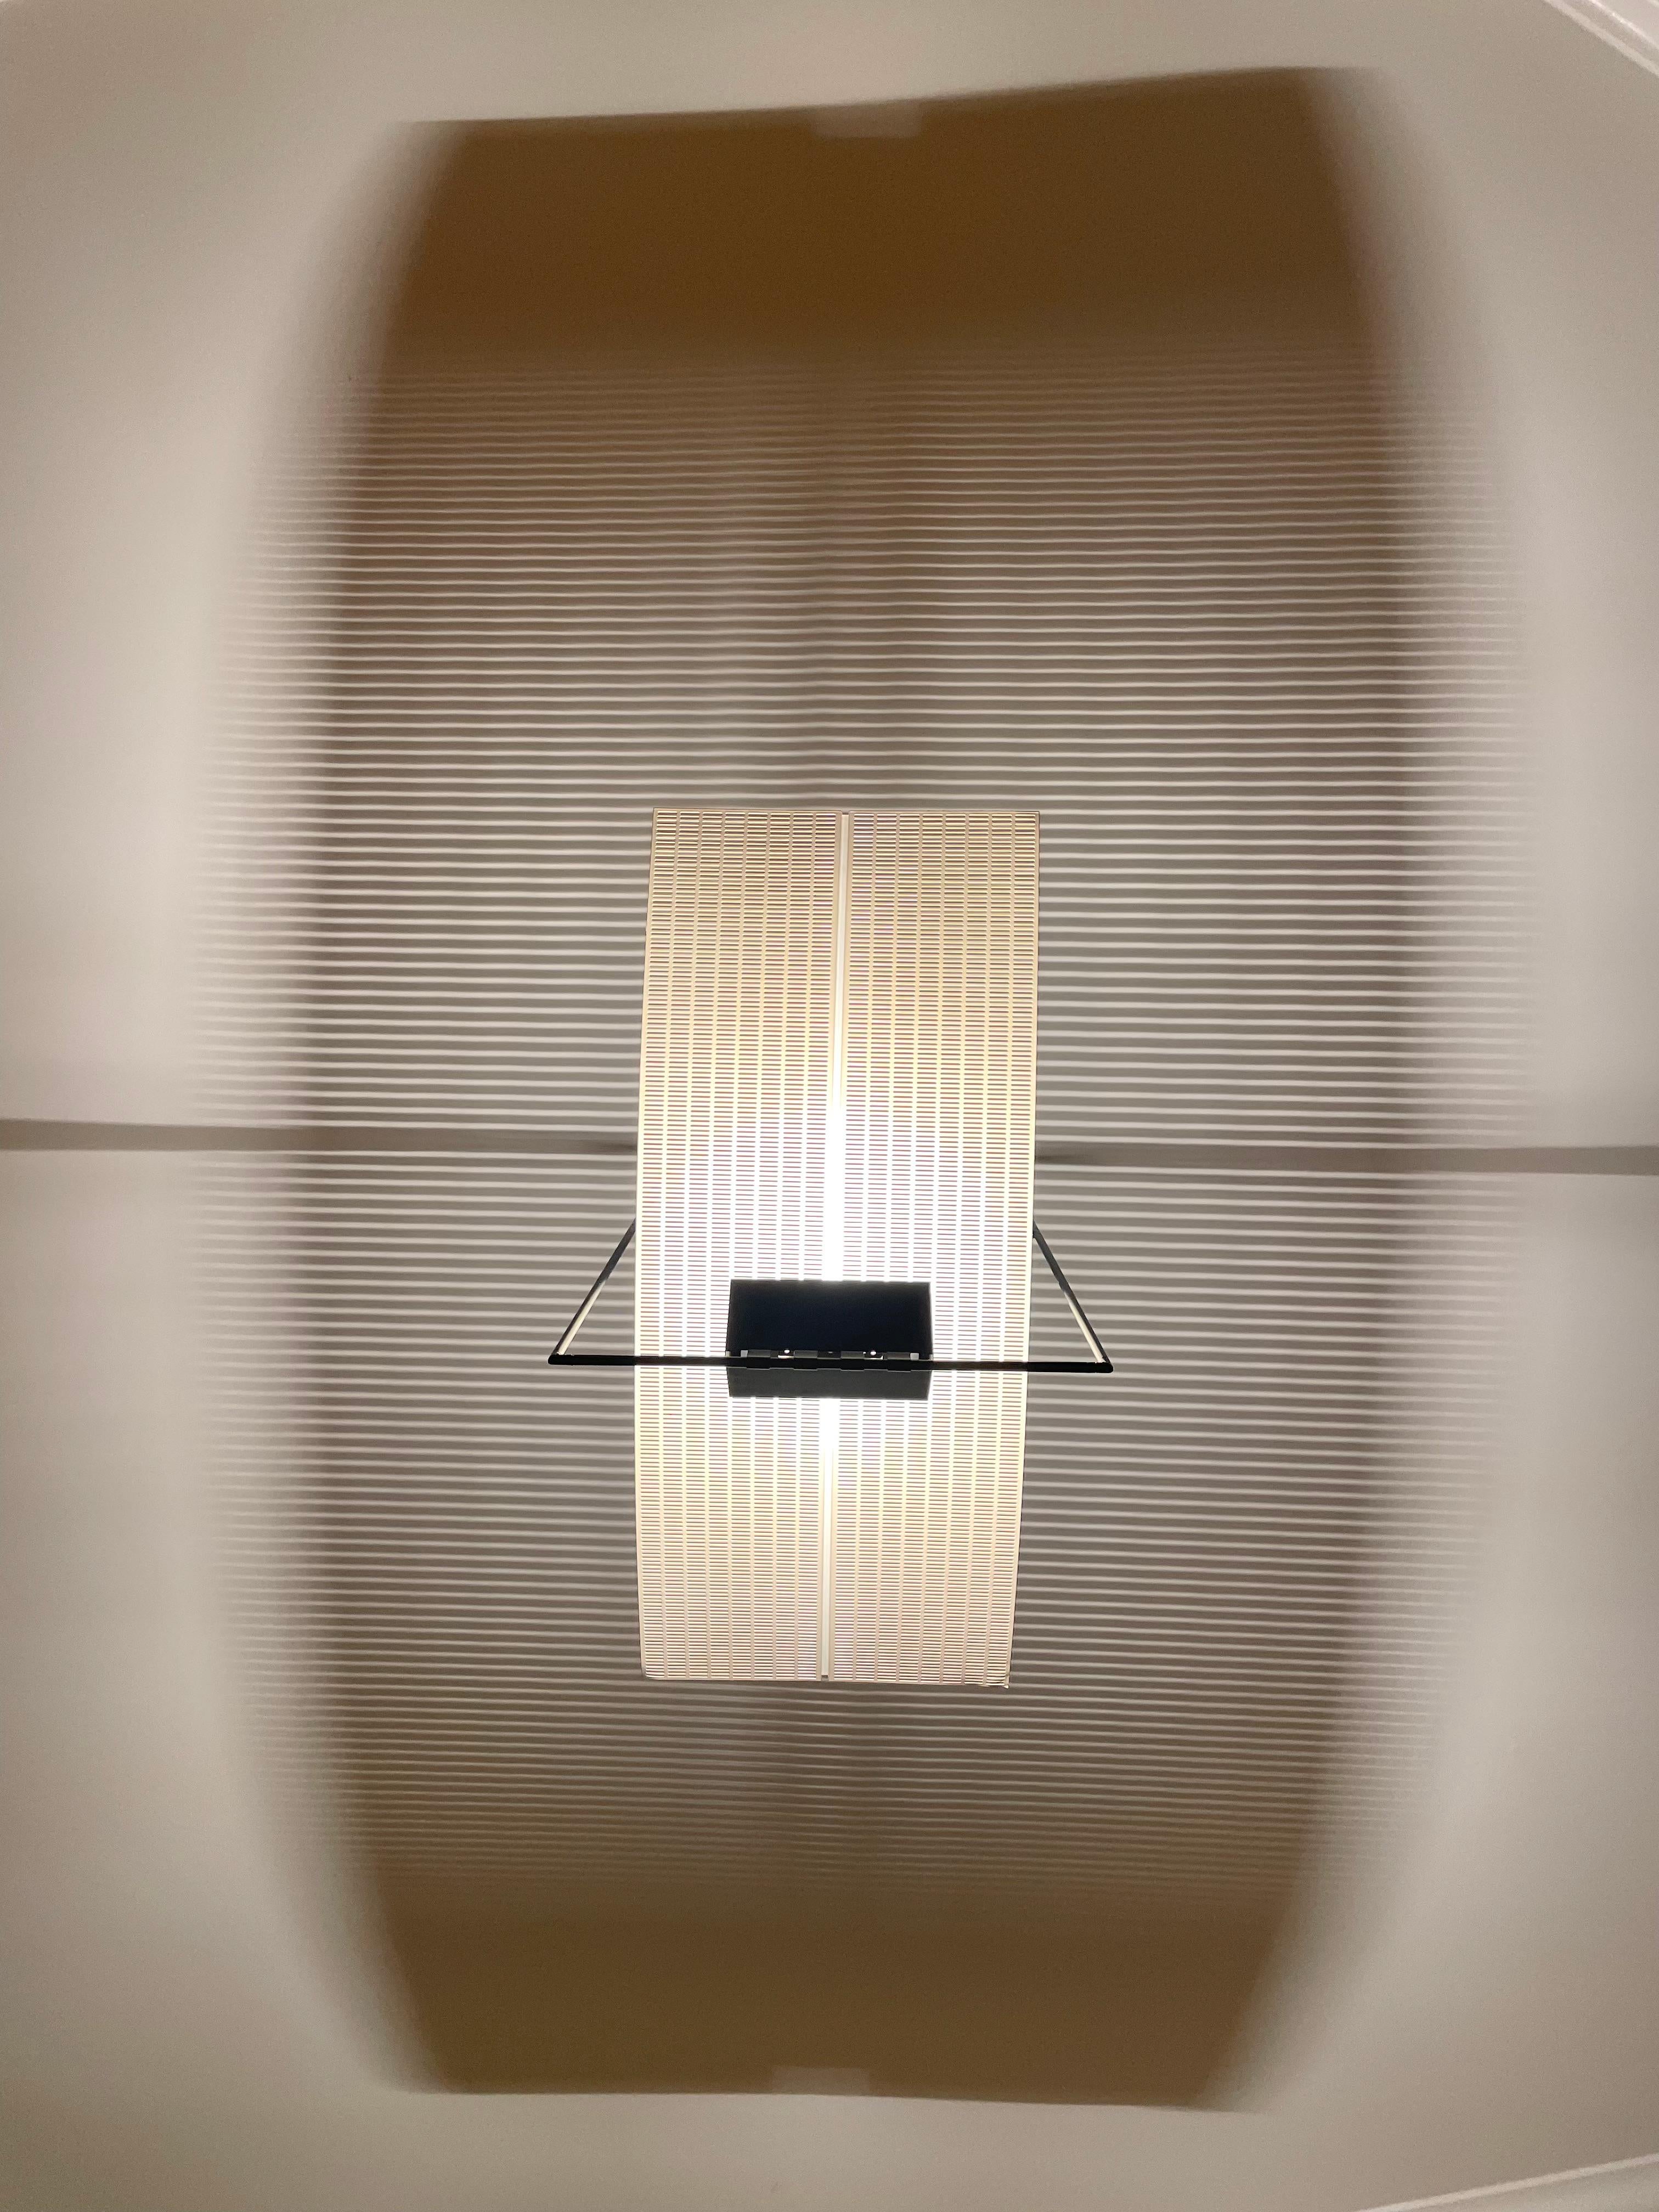 Zefiro Hanging lamp designed by Mario Botta for Artemide 2